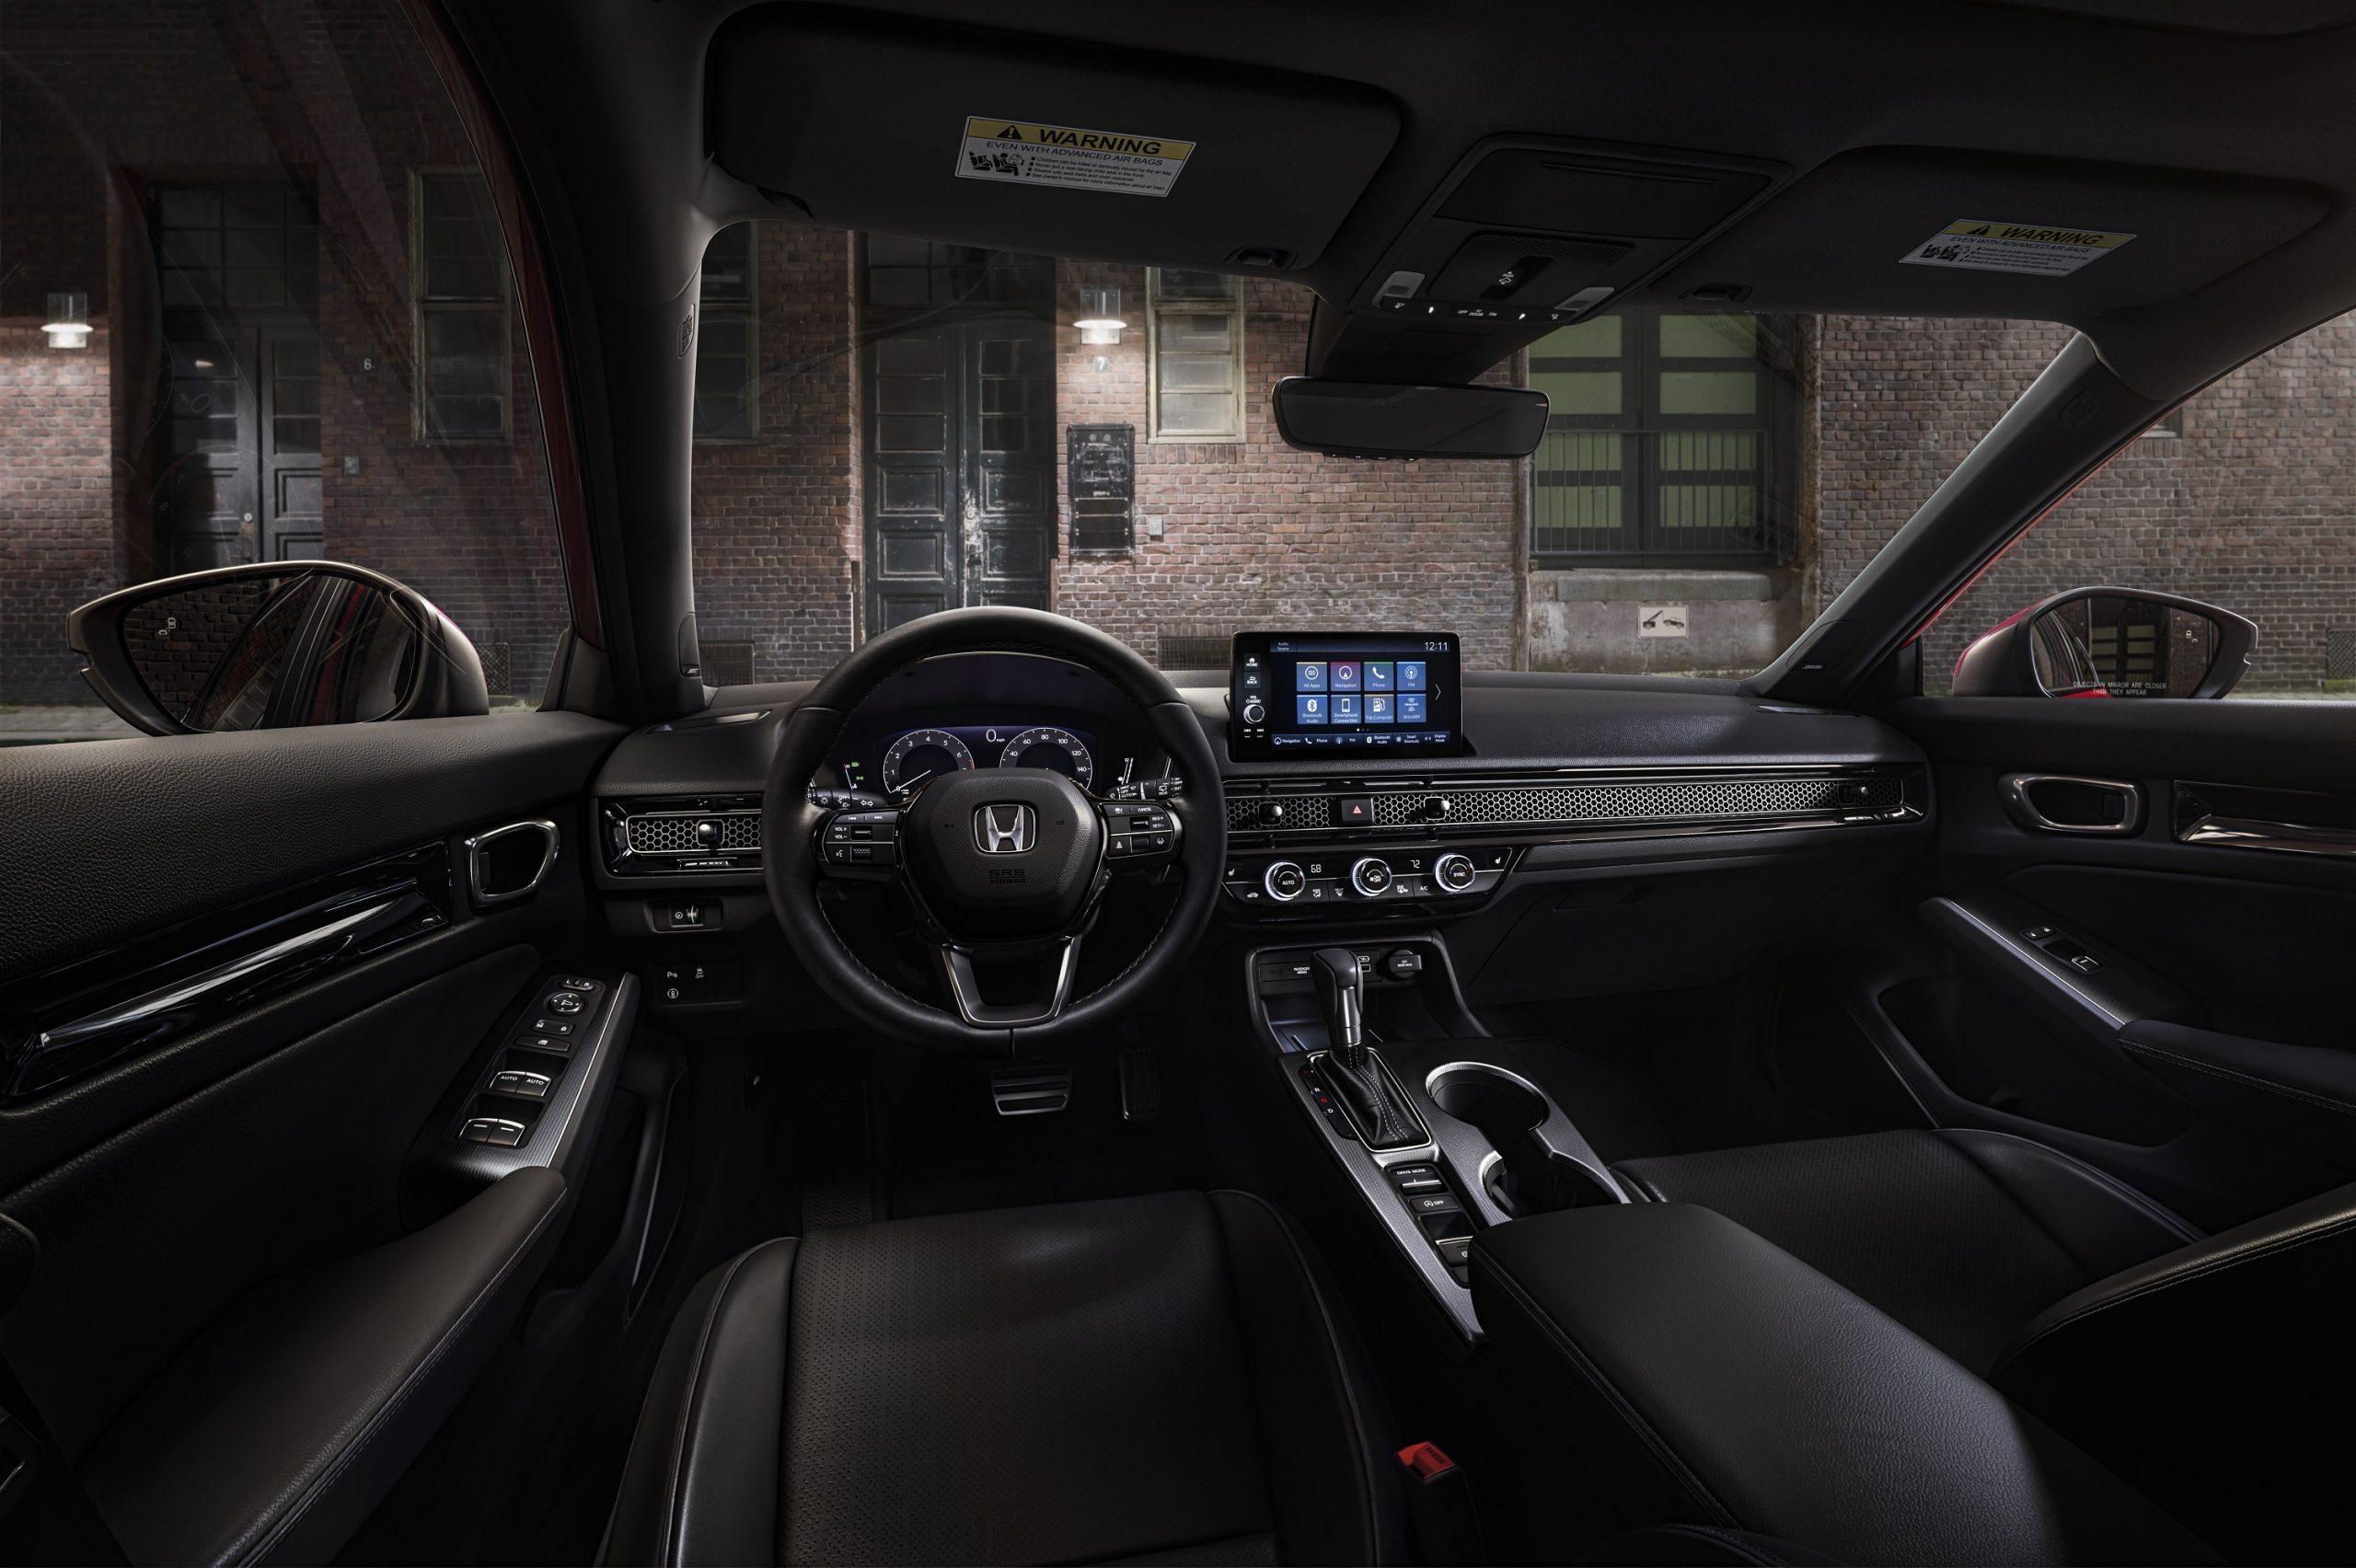 The 2022 Honda Civic interior shot from the driver's seat at night